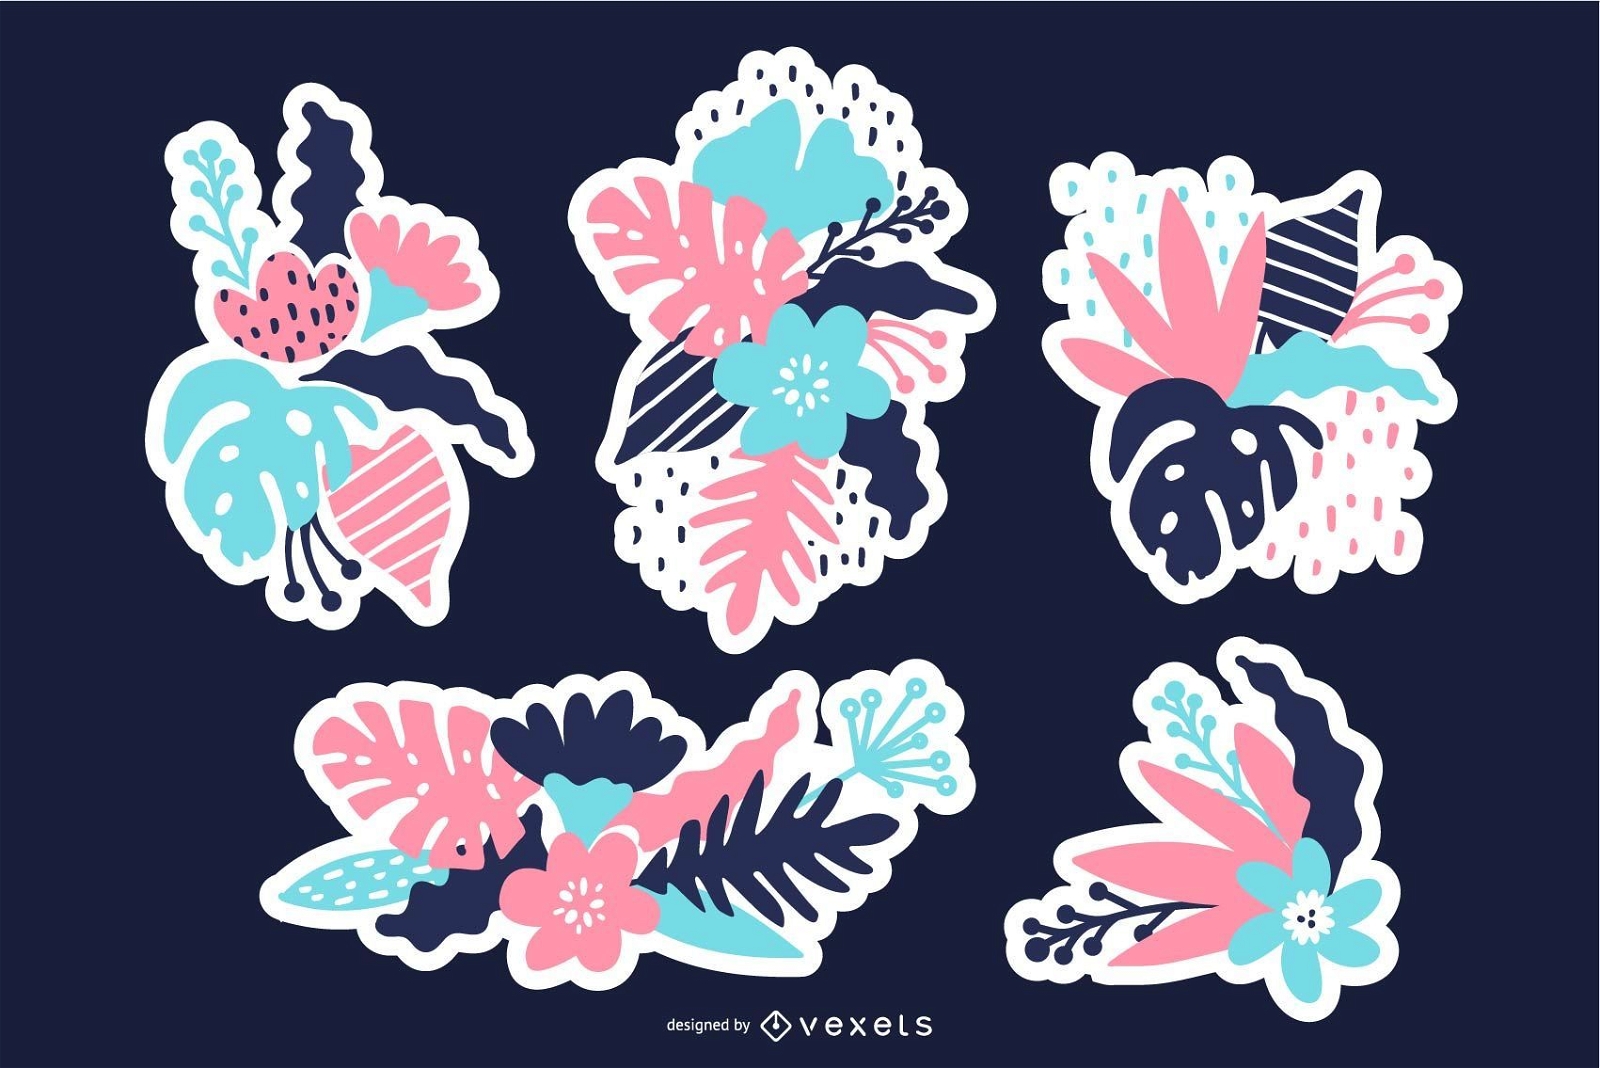 Floral Patches Illustration Set